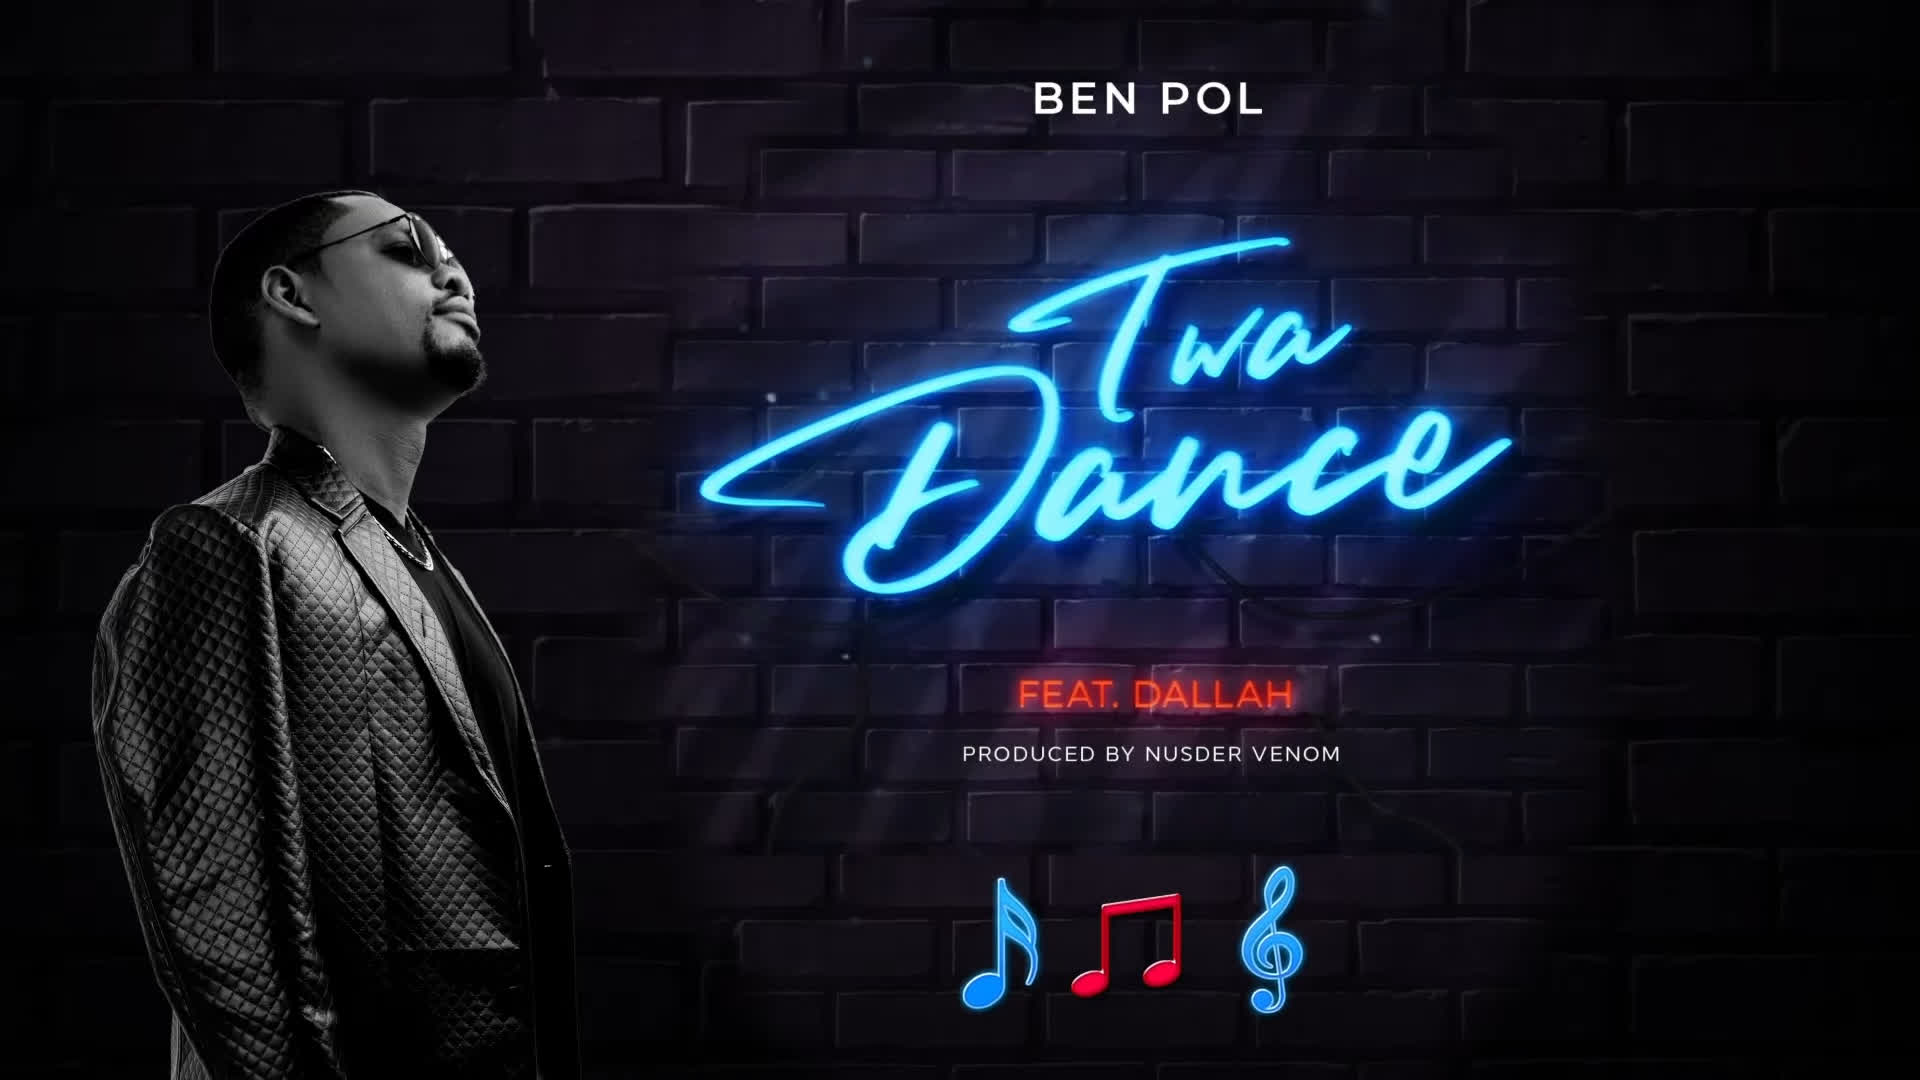 Ben Pol Twa Dance feat. Dallah Lyric video